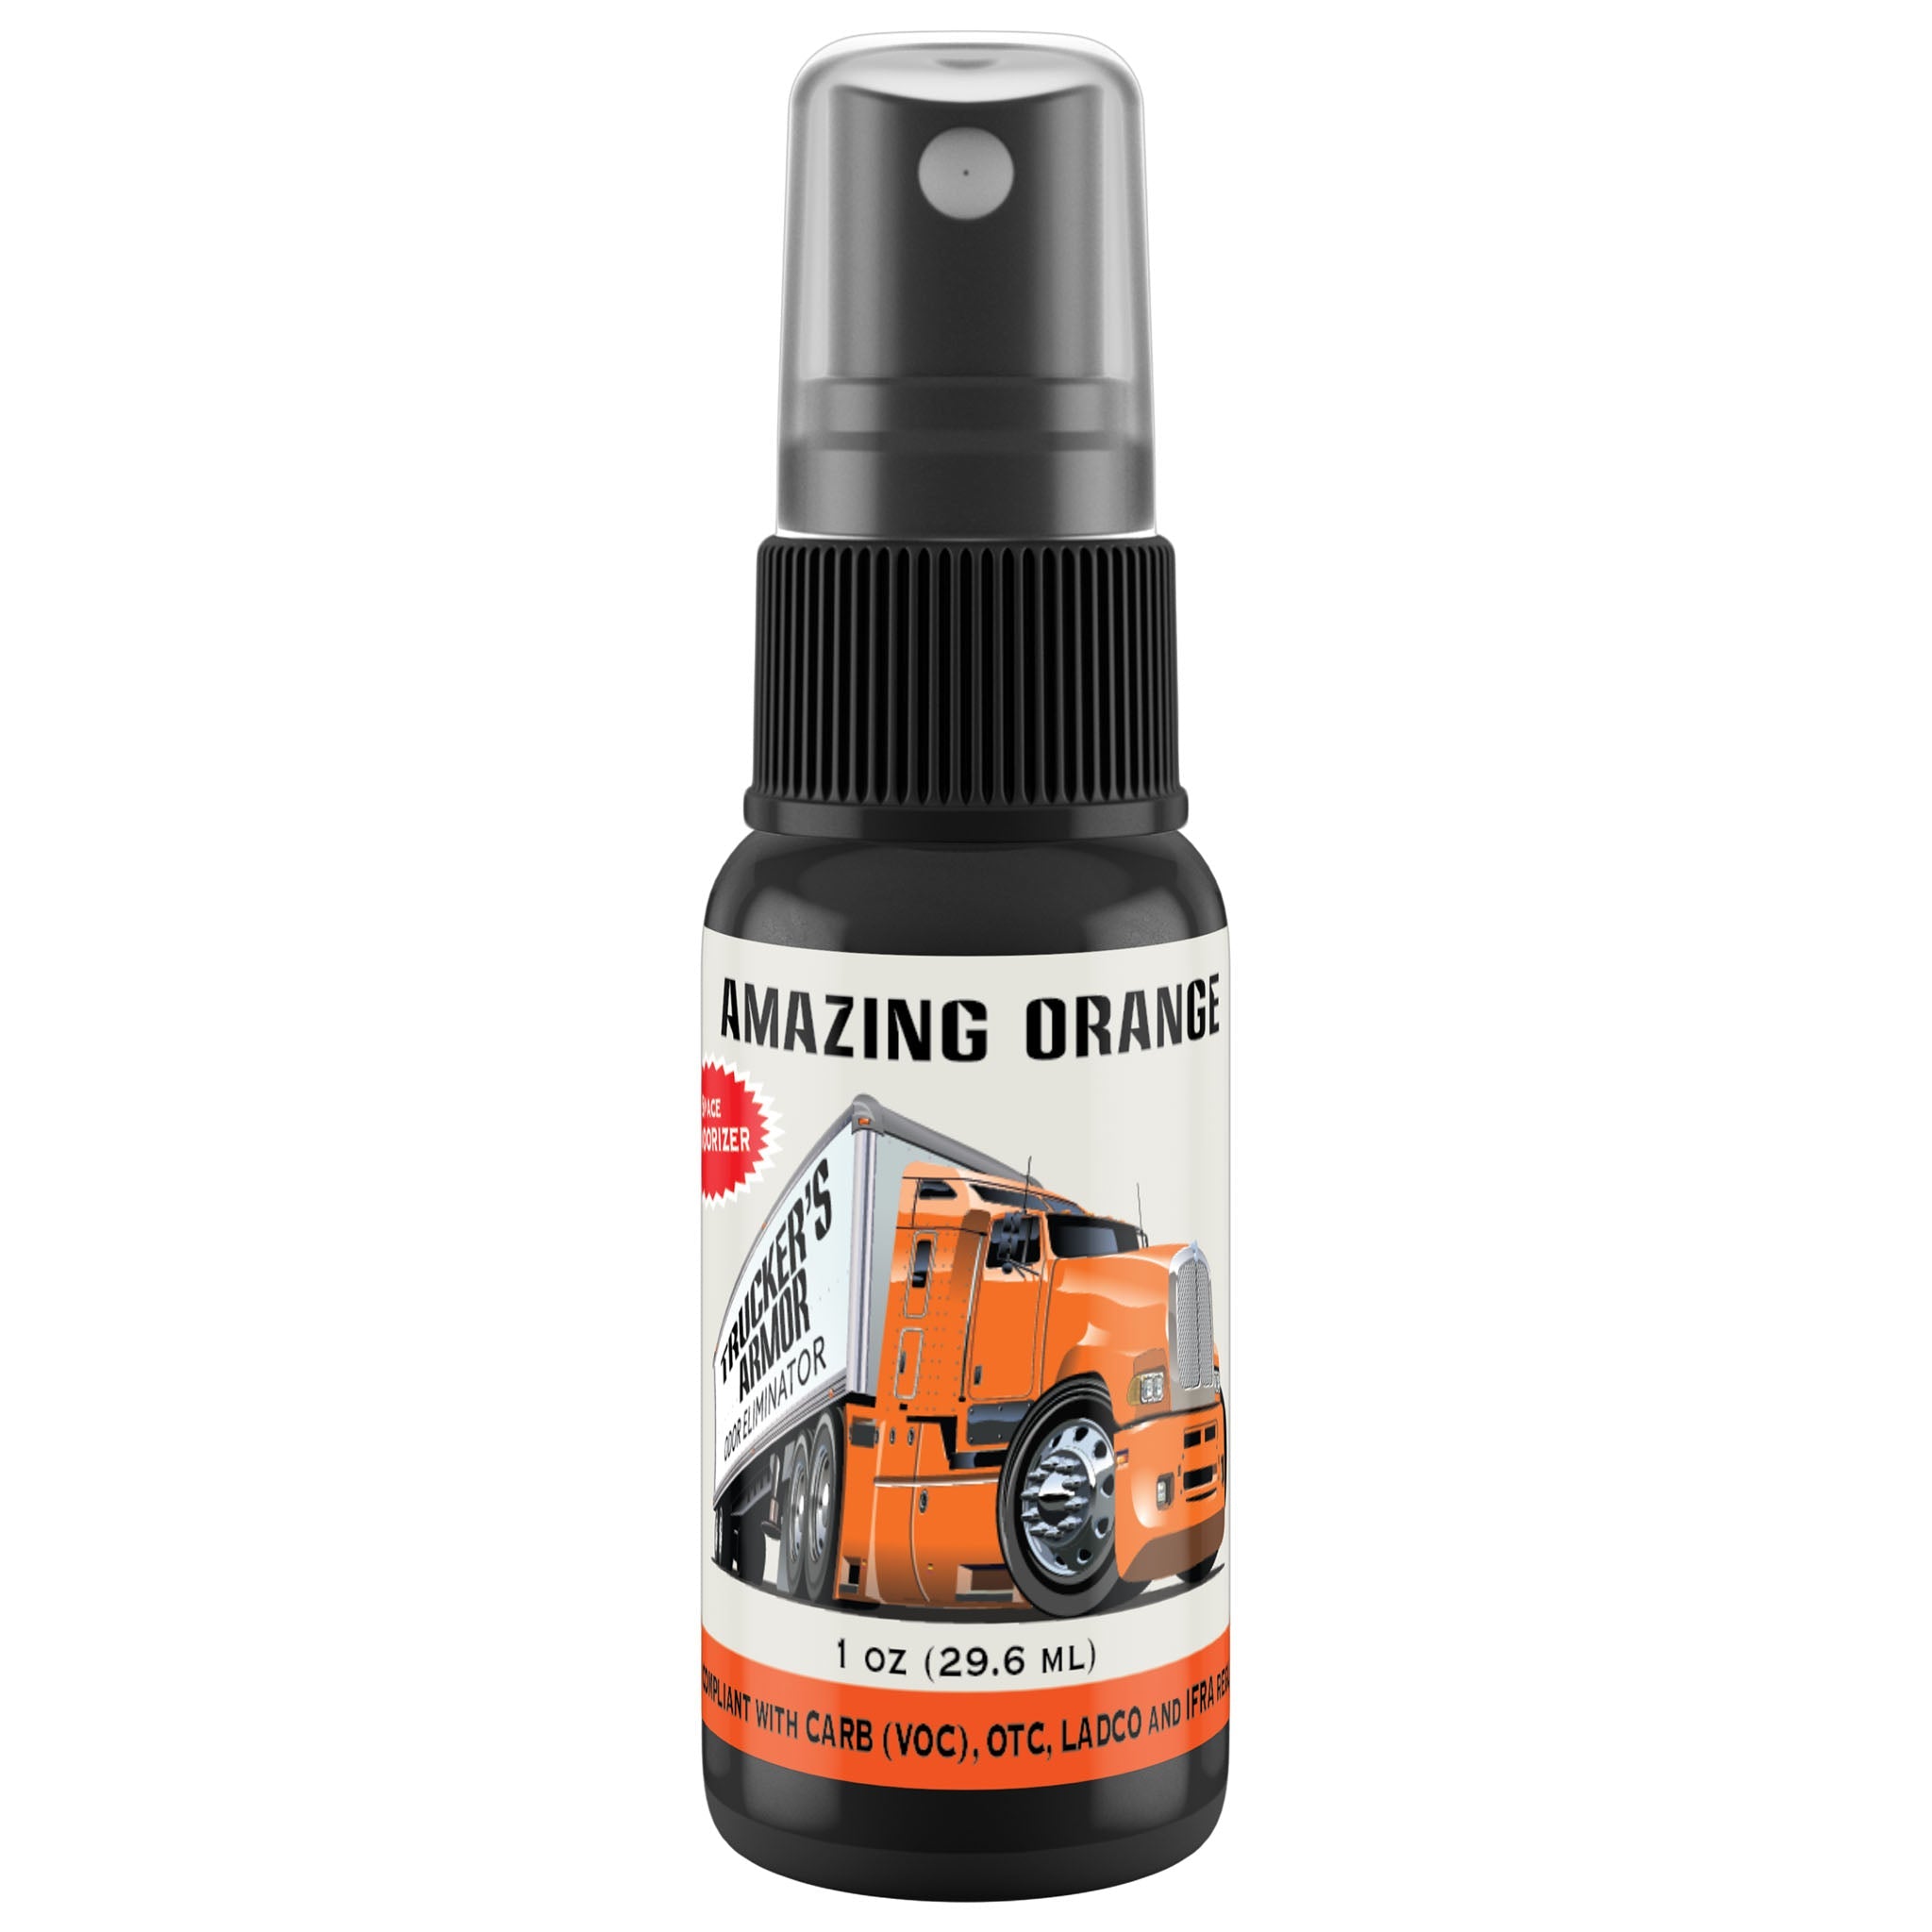 Trucker's Armor Odor Eliminator - Amazing Orange Scent